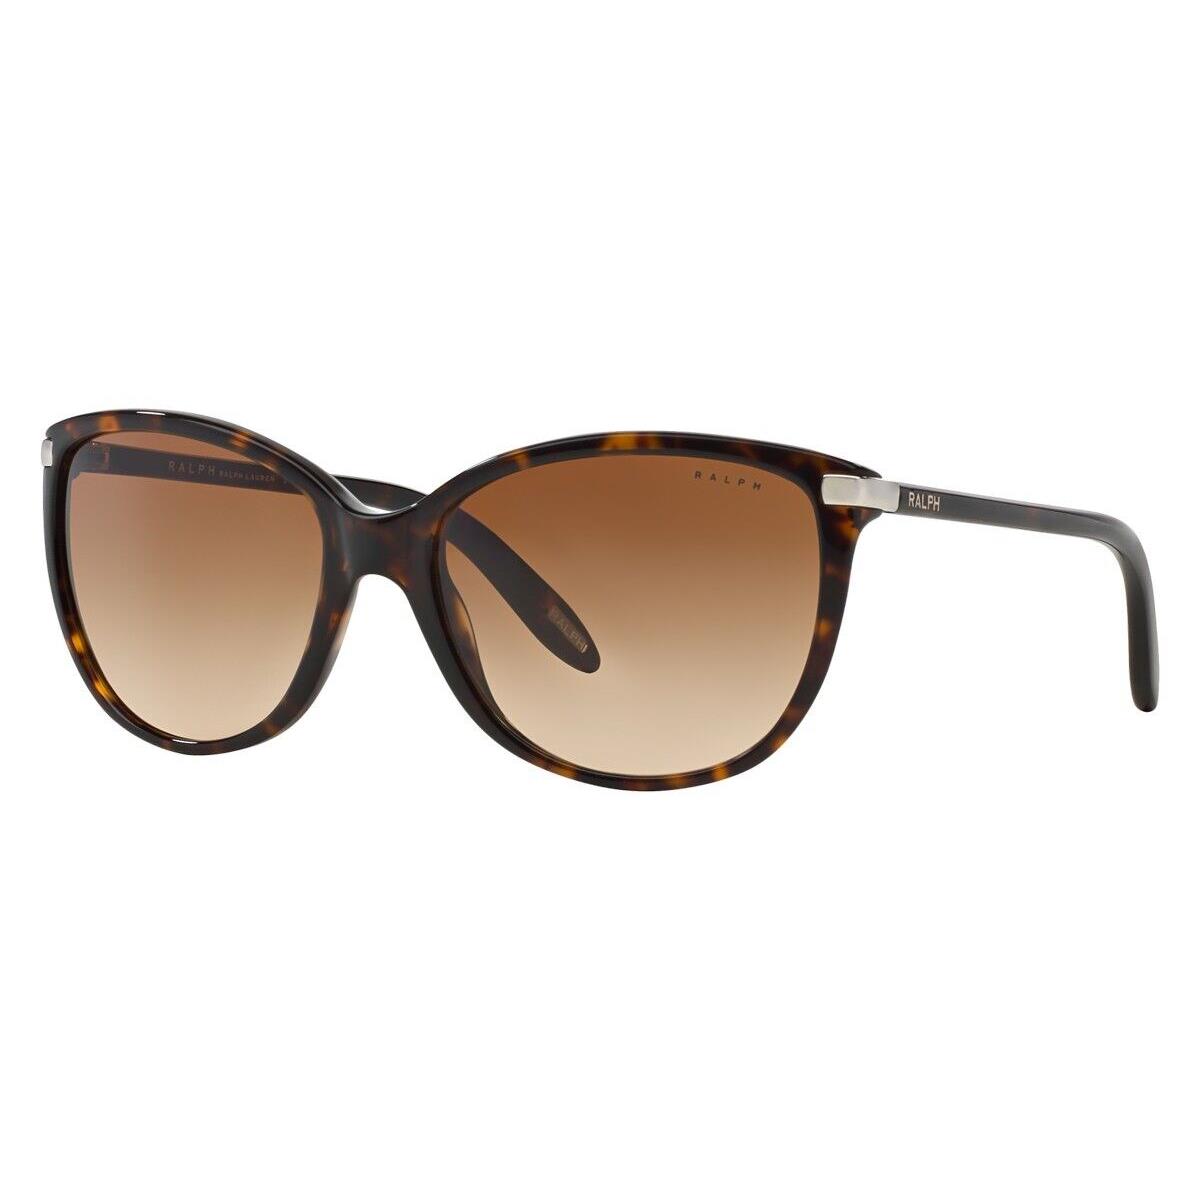 Ralph Lauren RA5160 Sunglasses Women Havana Cat Eye 57mm